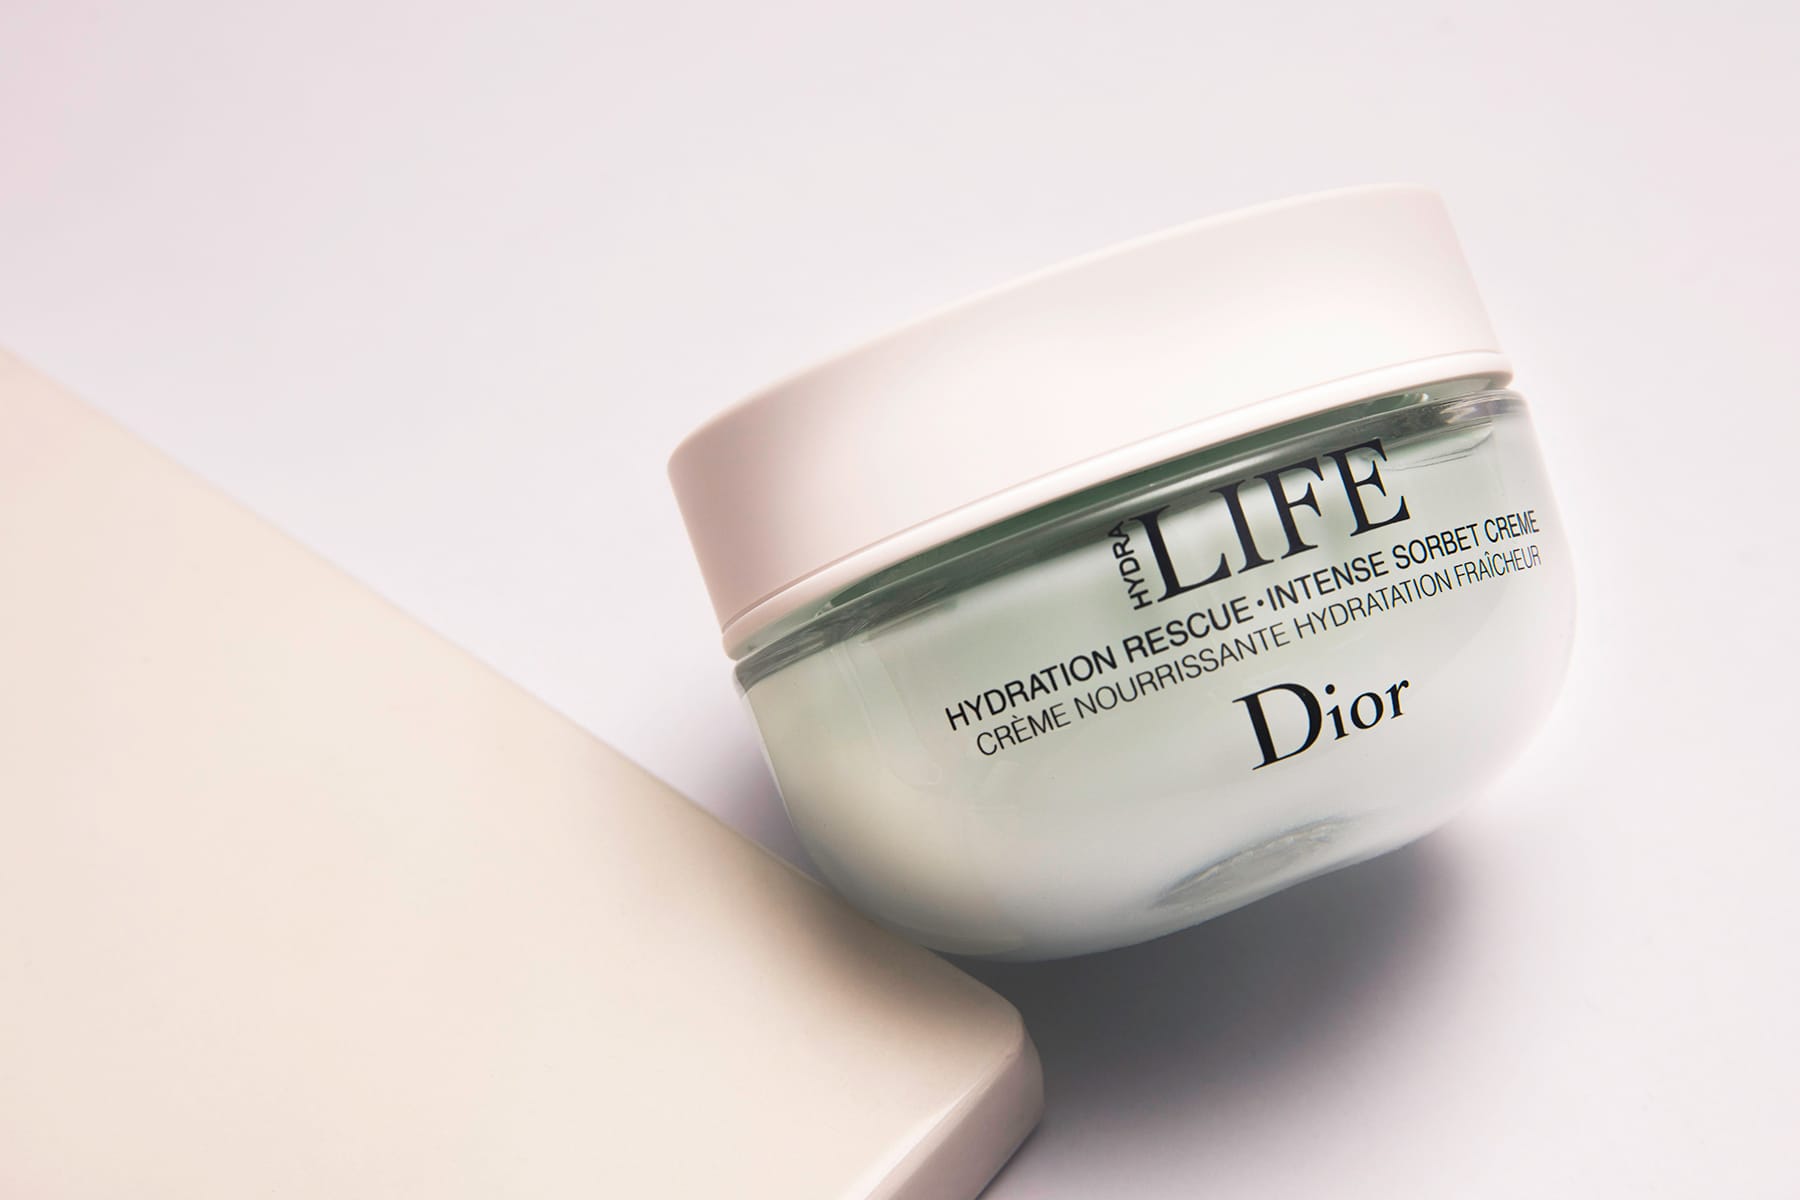 dior hydra life eye cream review